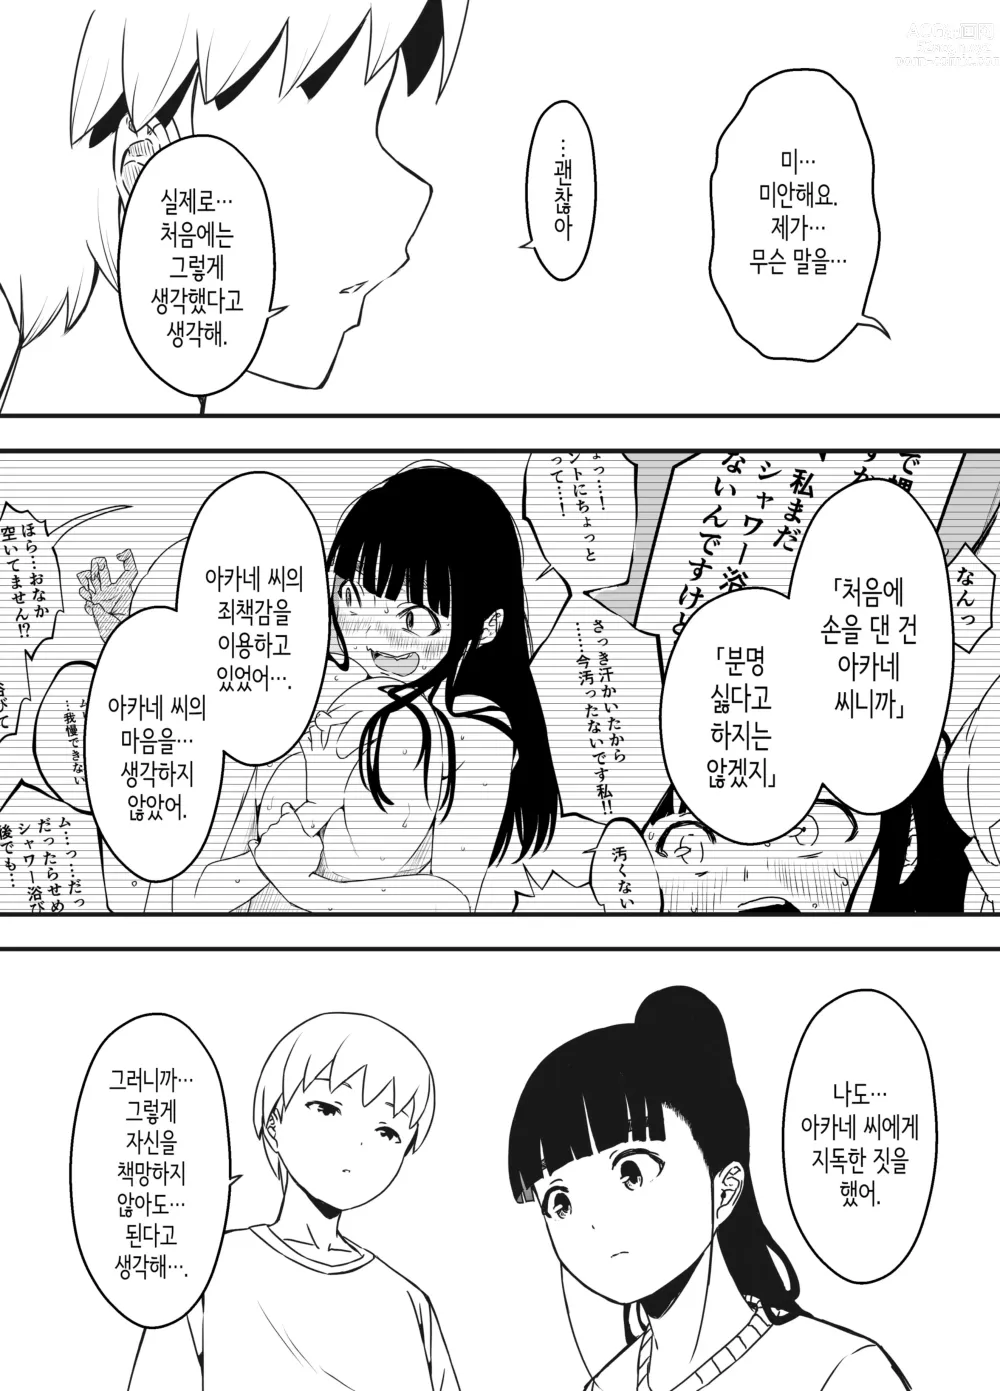 Page 11 of doujinshi 의붓 누나와의 7일간 생활 5